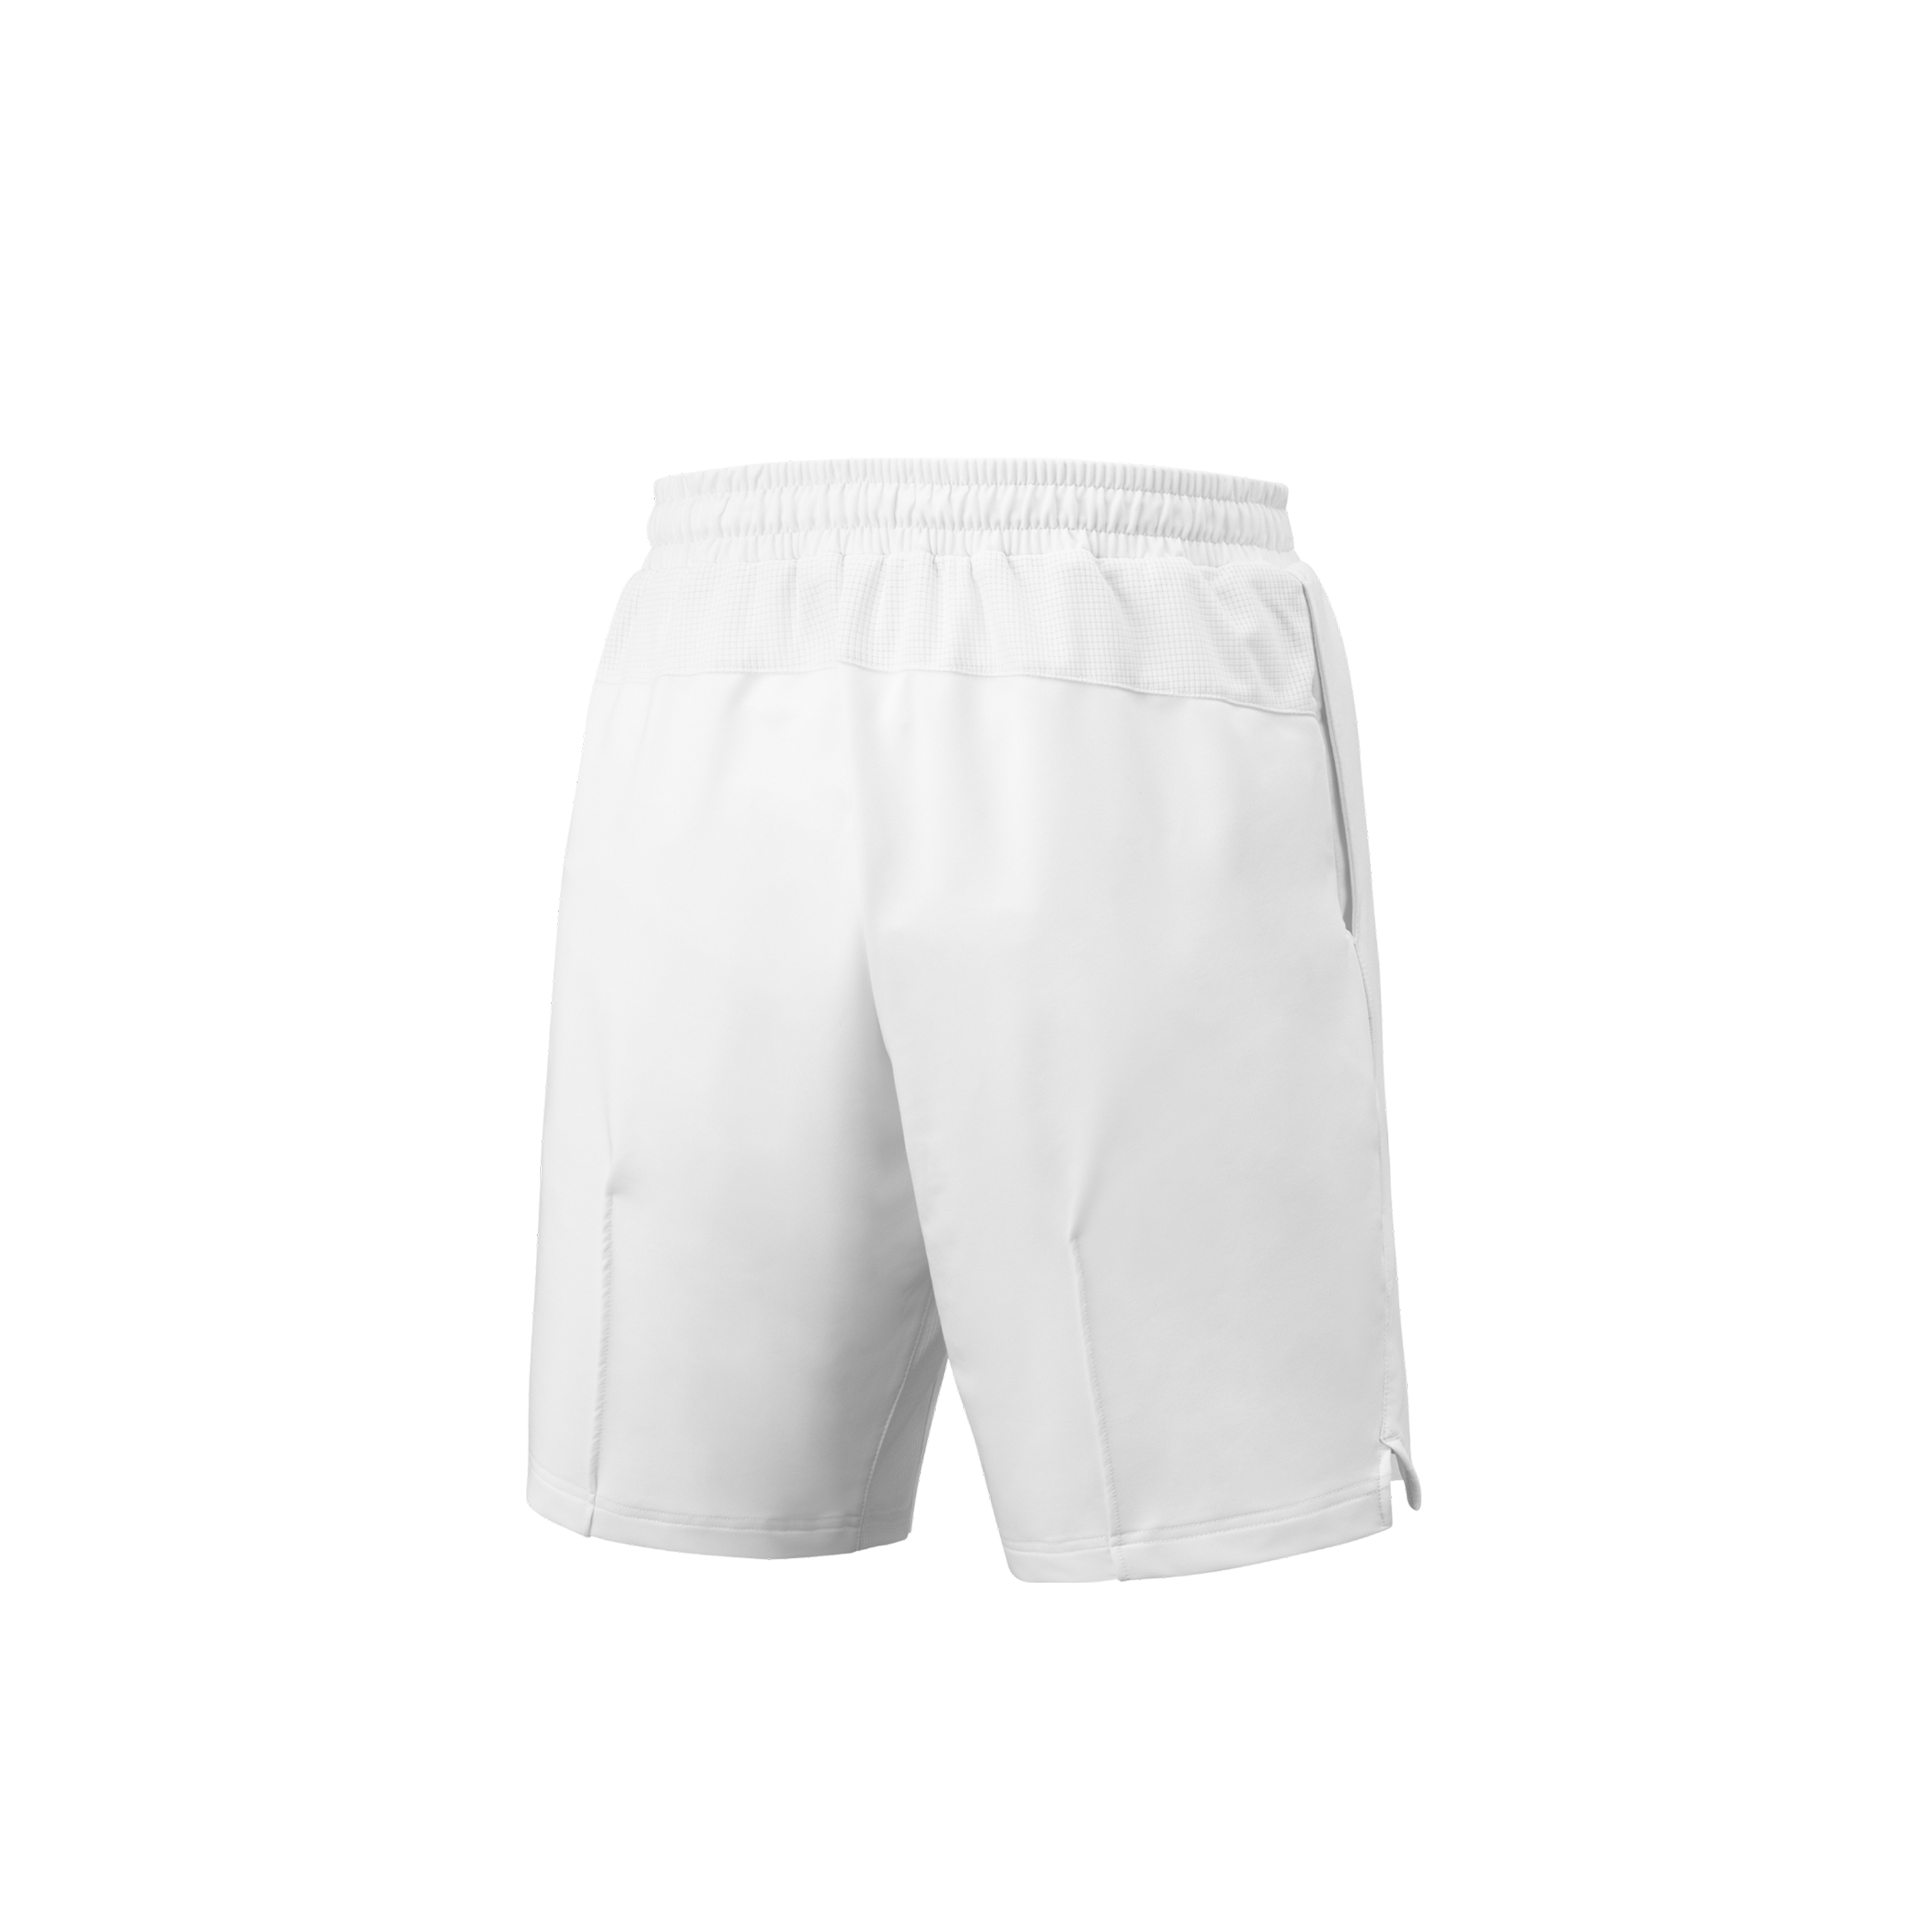 Yonex Premium Badminton/ Sports Shorts 15140 White MEN'S